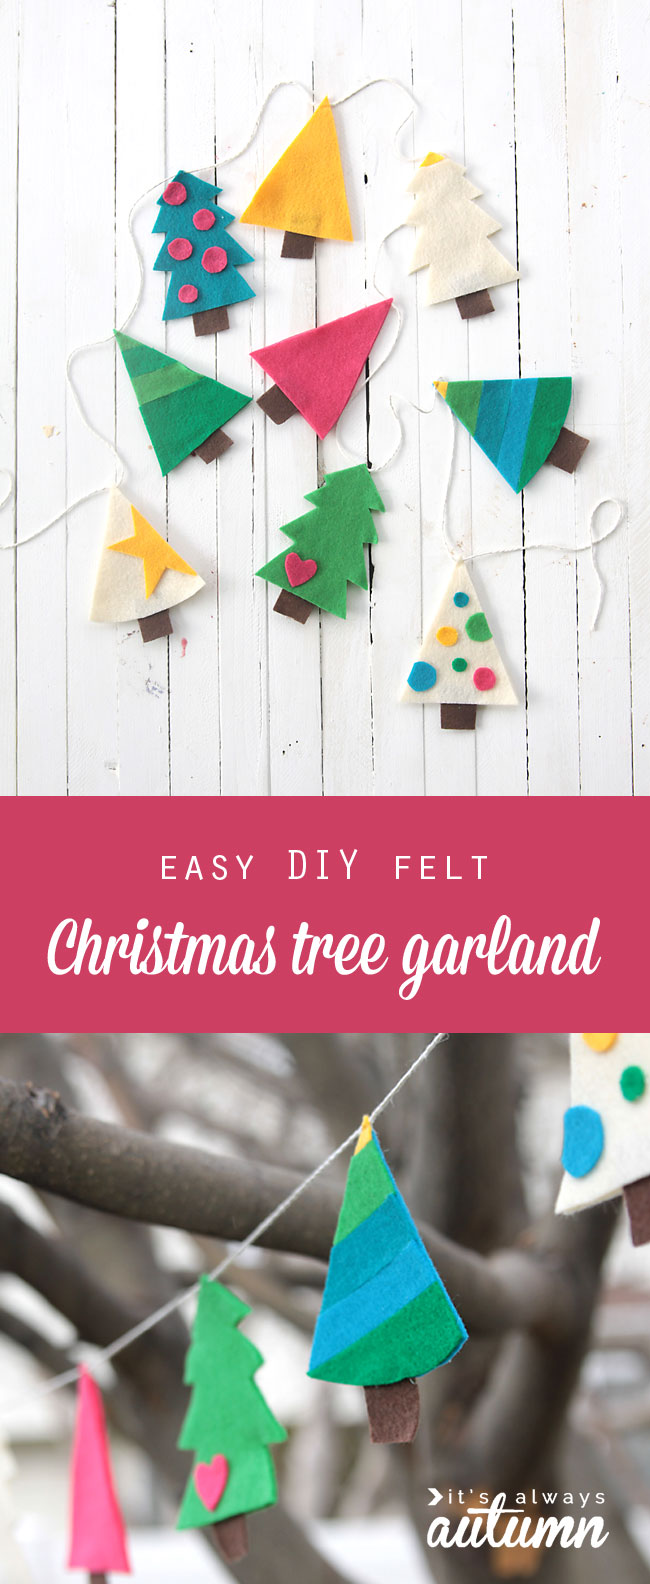 easy DIY felt Christmas tree garland - simple holiday decor